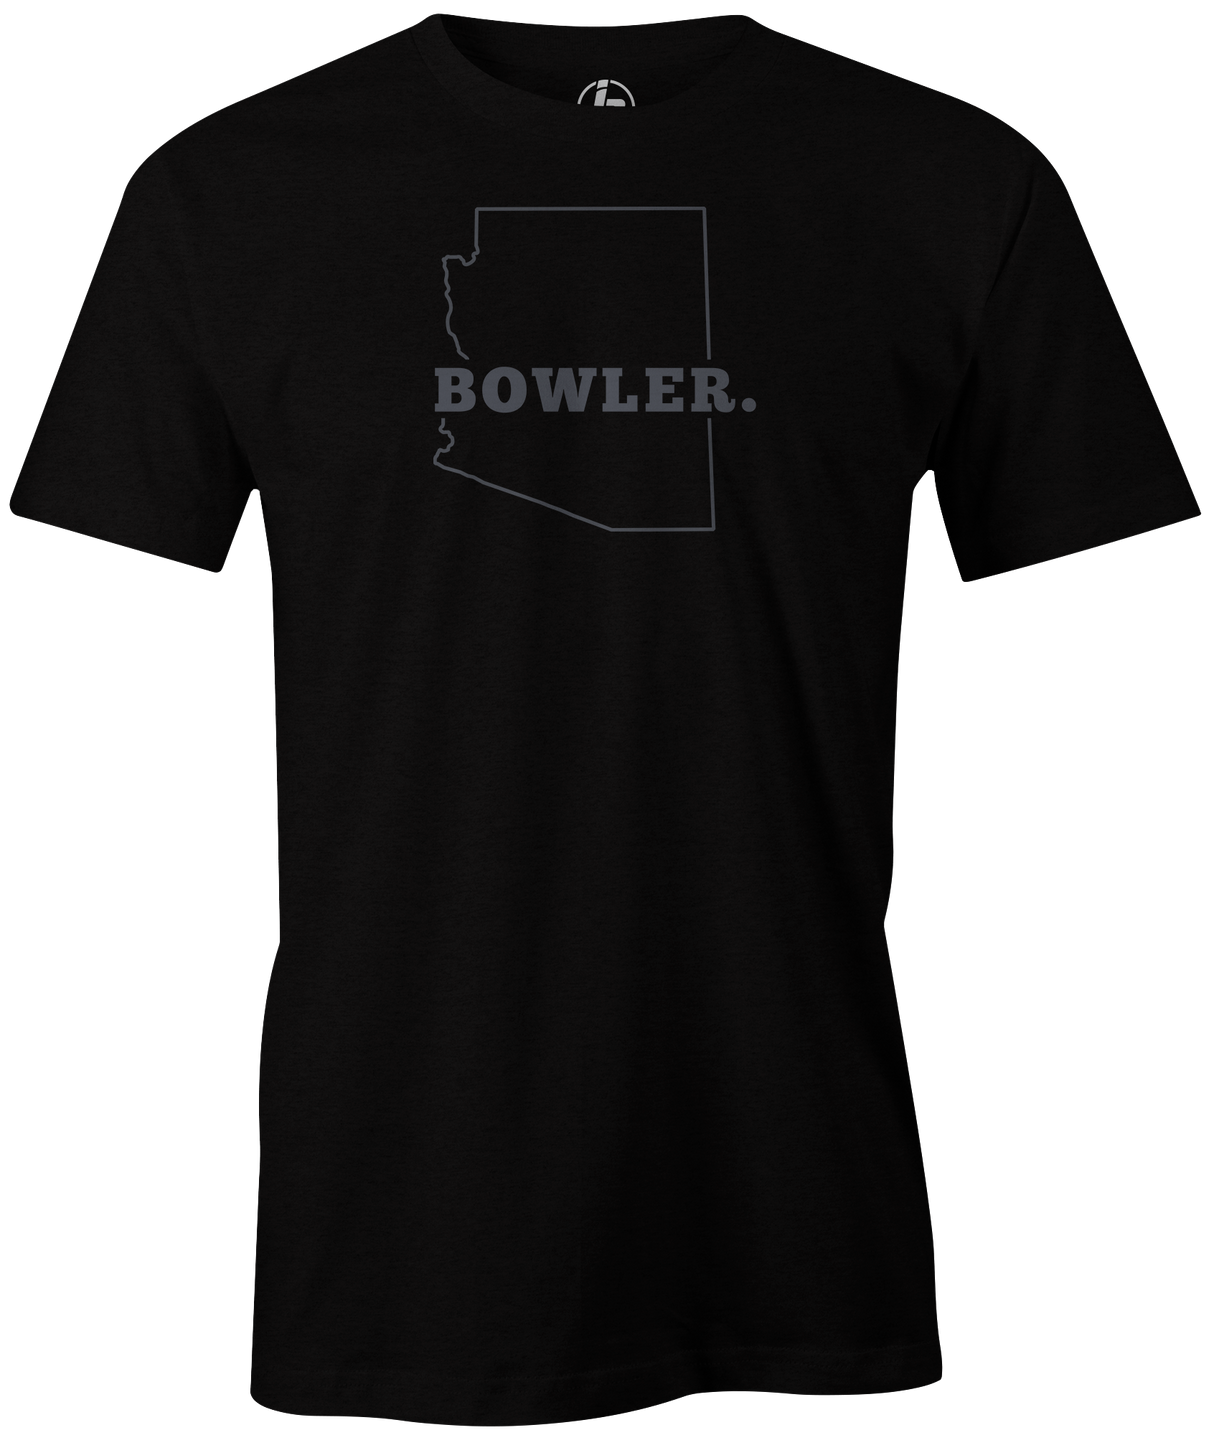 Arizona State Men's Bowling T-shirt, Black, Cool, novelty, tshirt, tee, tee-shirt, tee shirt, teeshirt, team, comfortable